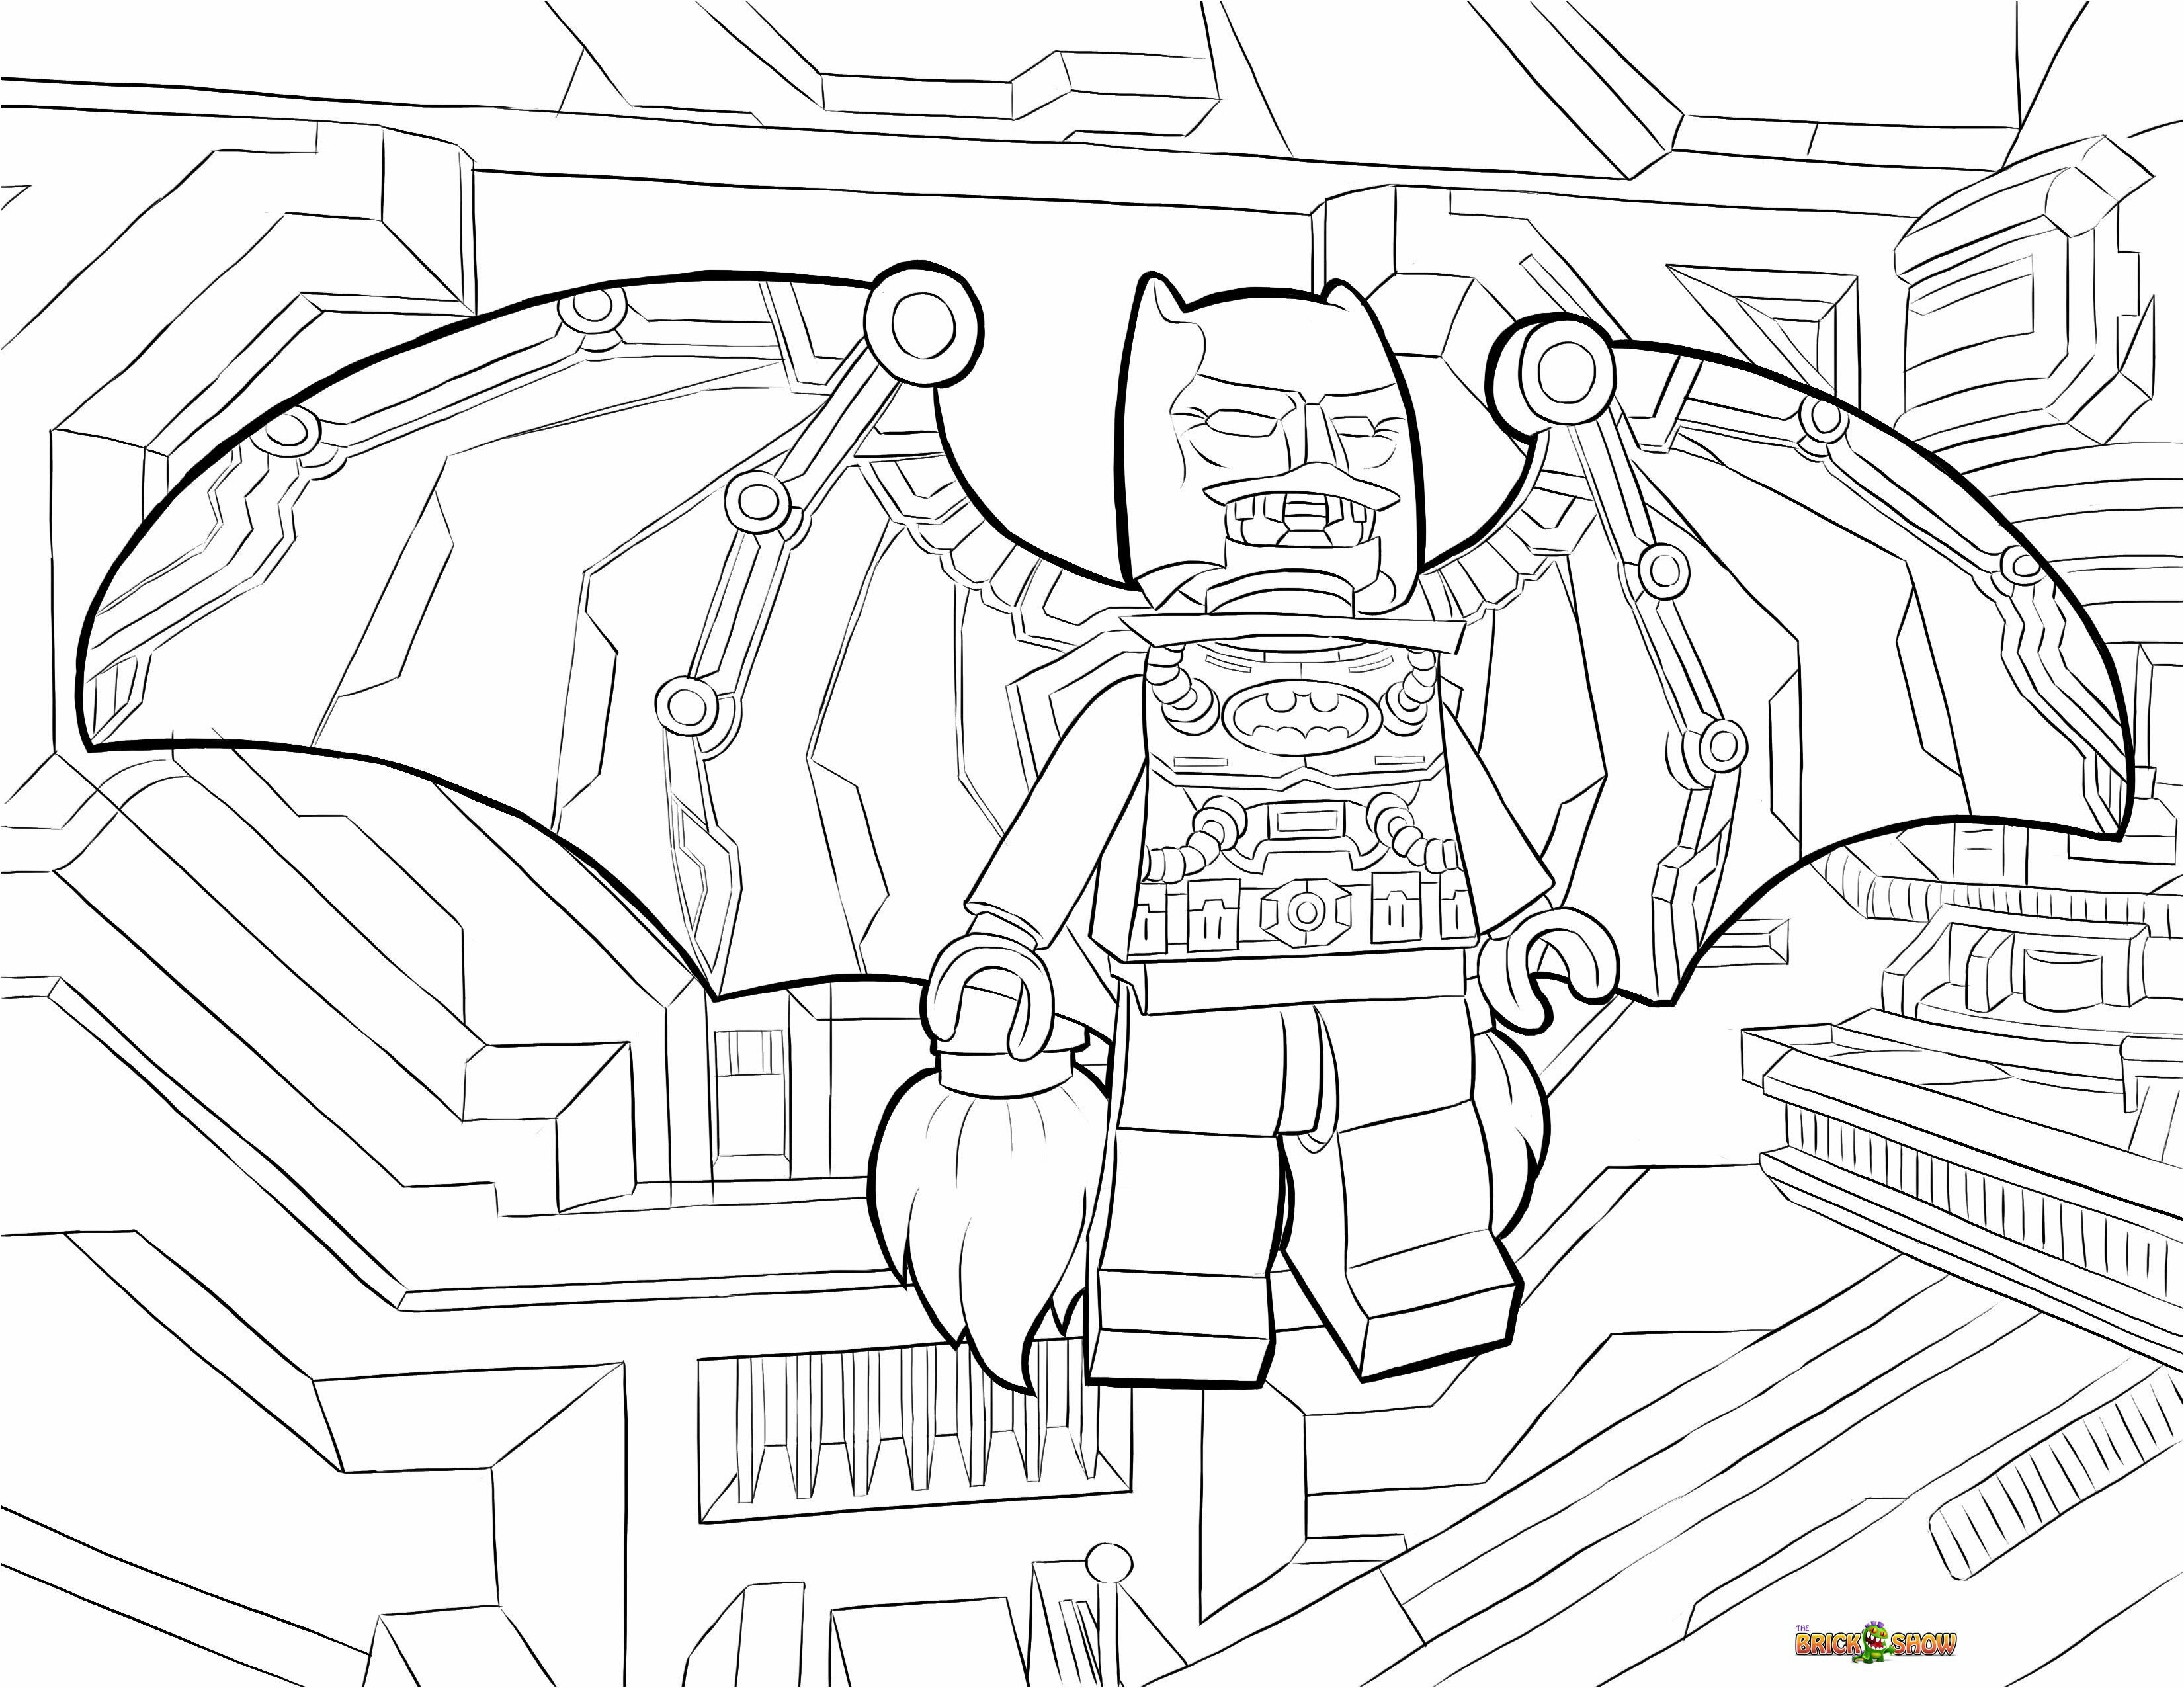 stunning lego batman 3 space suit coloring page printable sheet lego dc original illustration lego batman coloring pages free 